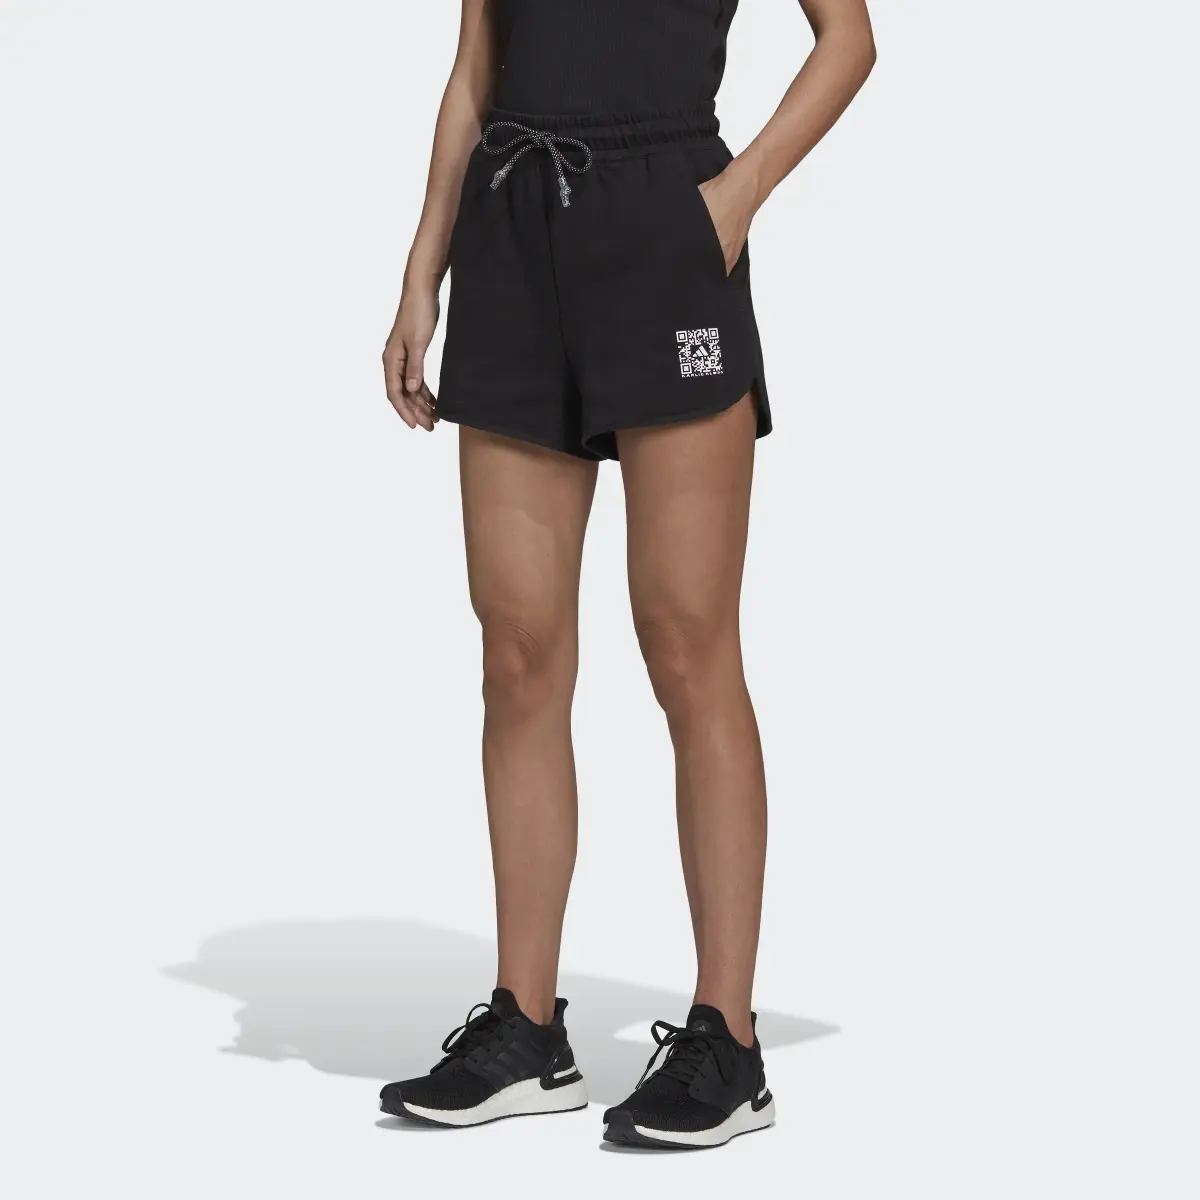 Adidas x Karlie Kloss Shorts. 1